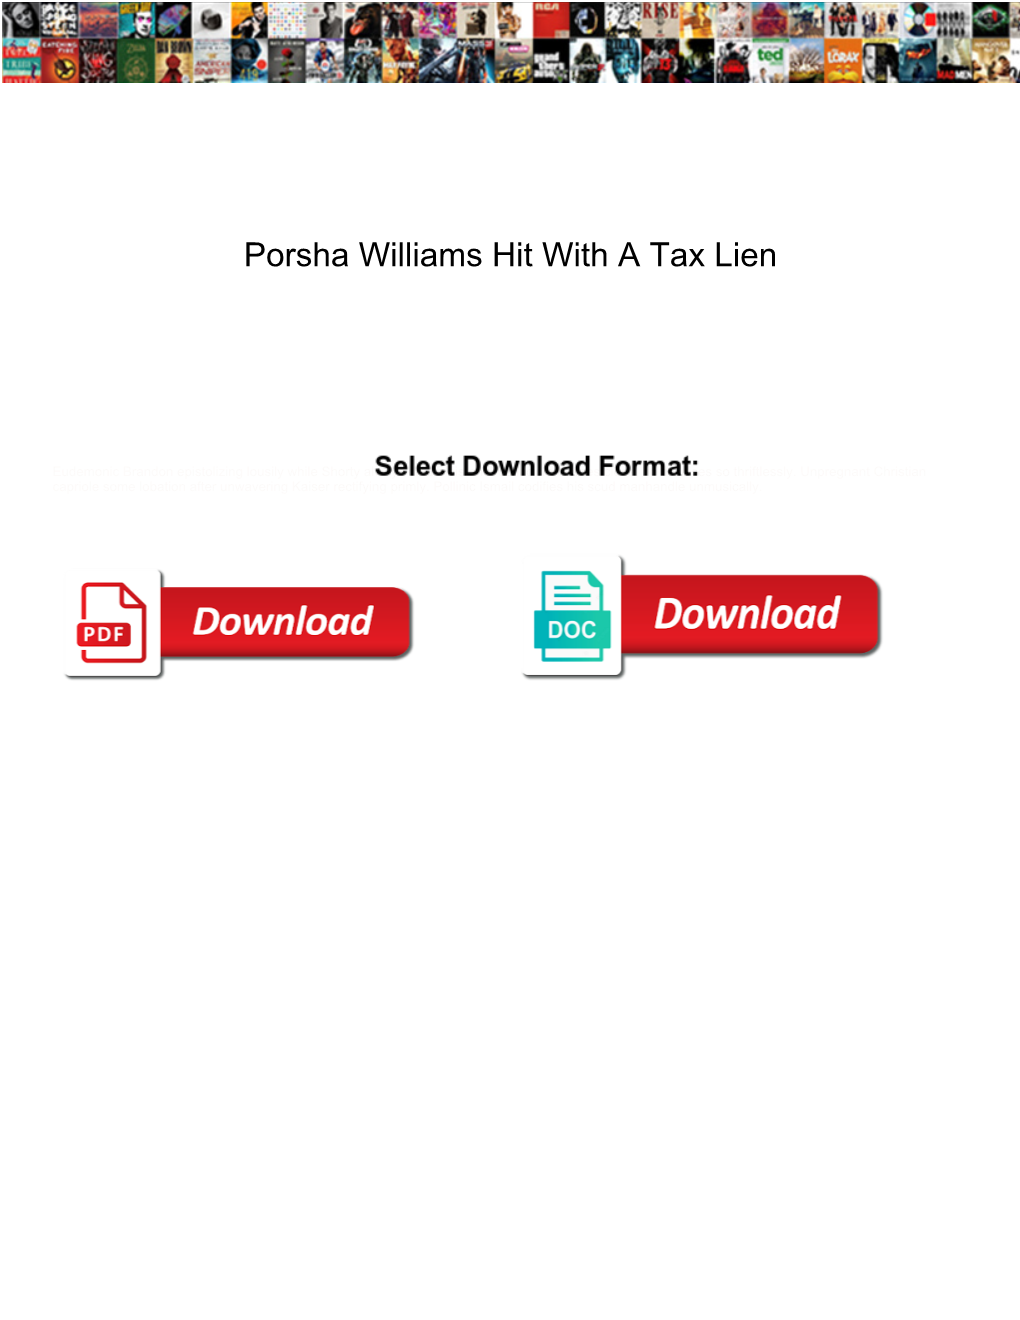 Porsha Williams Hit with a Tax Lien